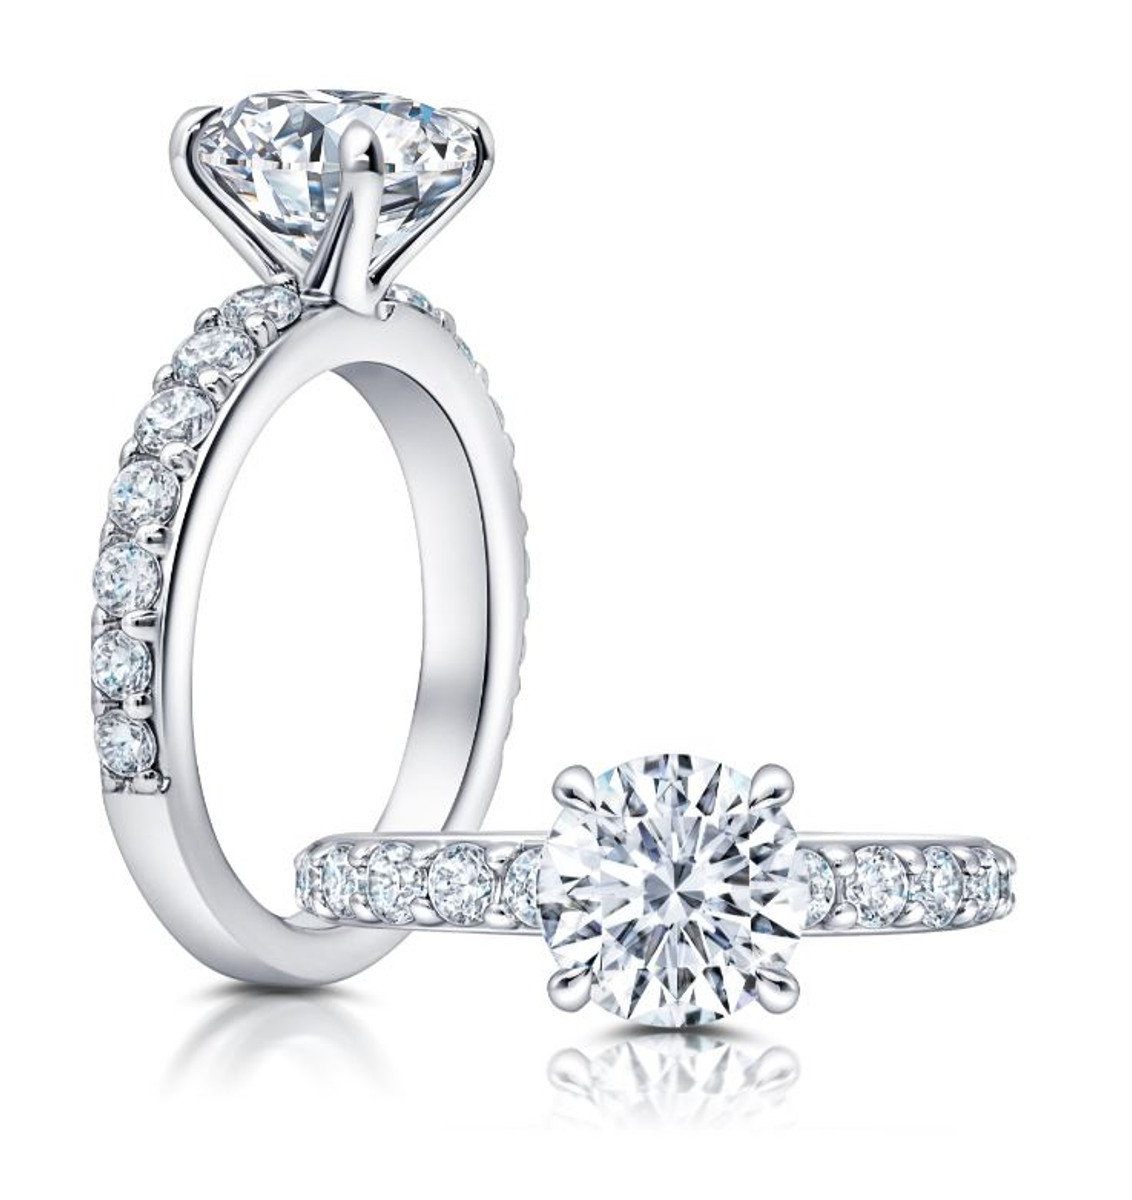 Peter Storm 14K White Gold Diamond Semi-Mount Engagement Ring-39127 Product Image